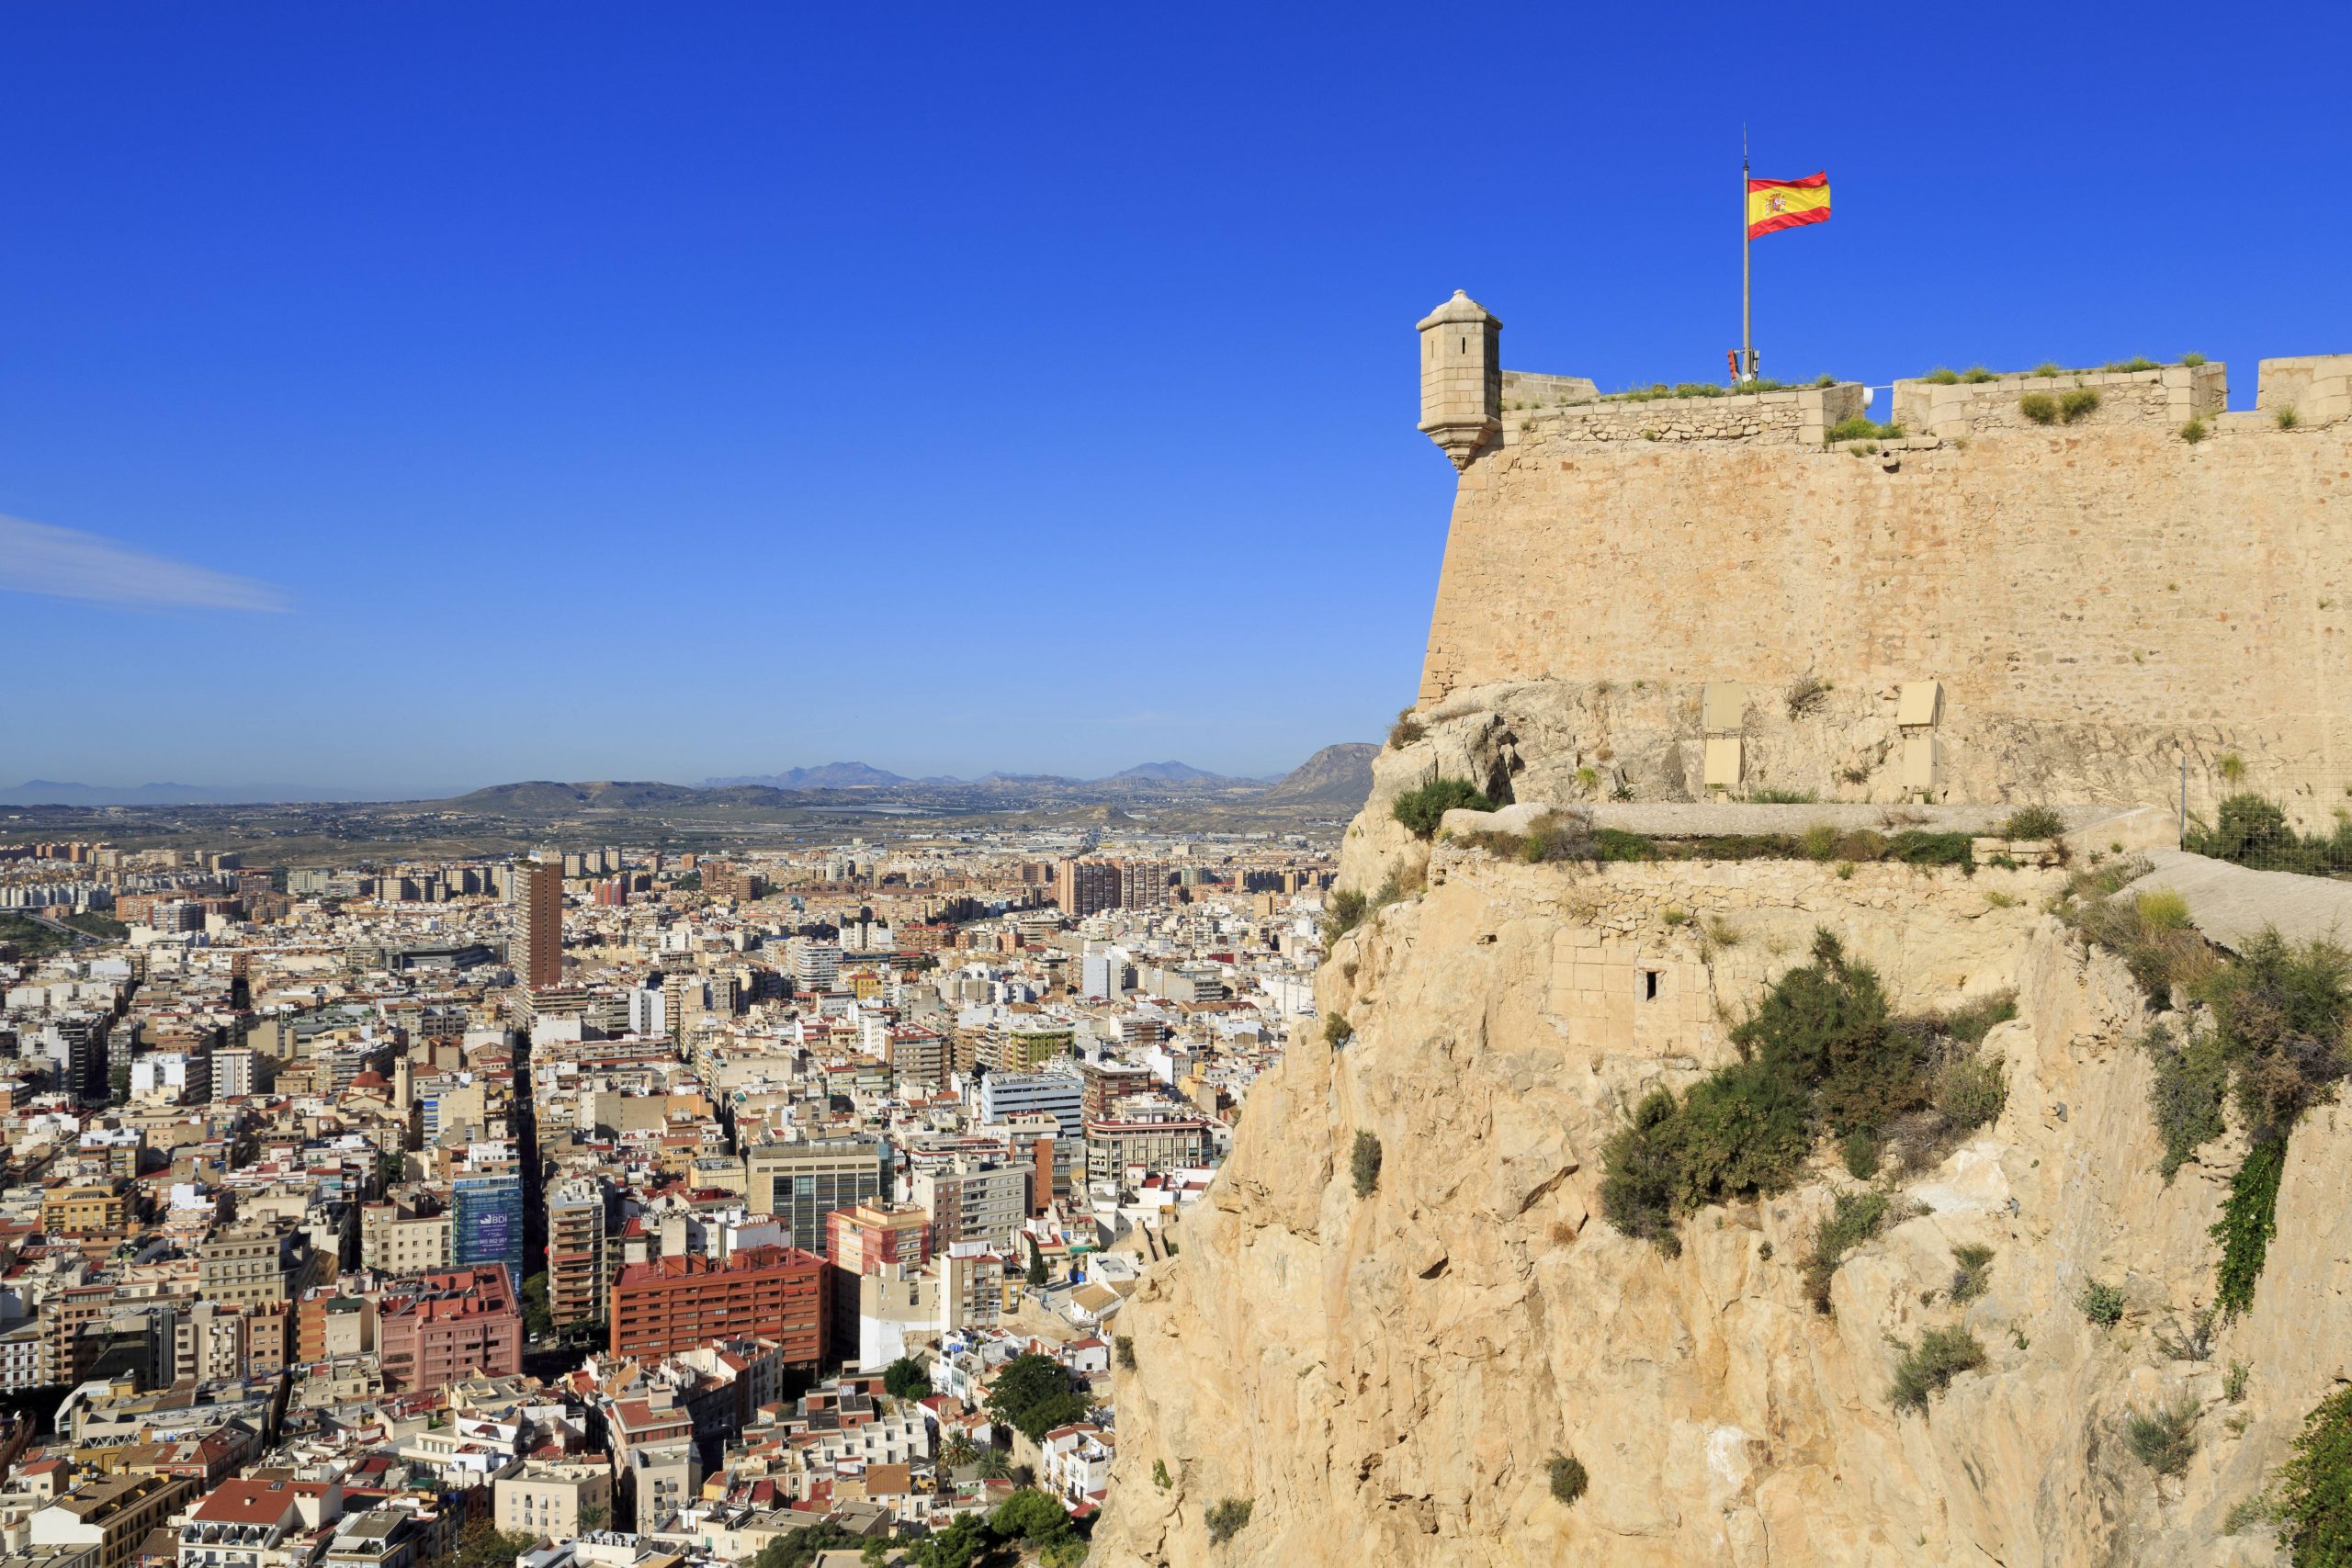 Tourist app for Spain's Alicante area reaches over 100,000 downloads